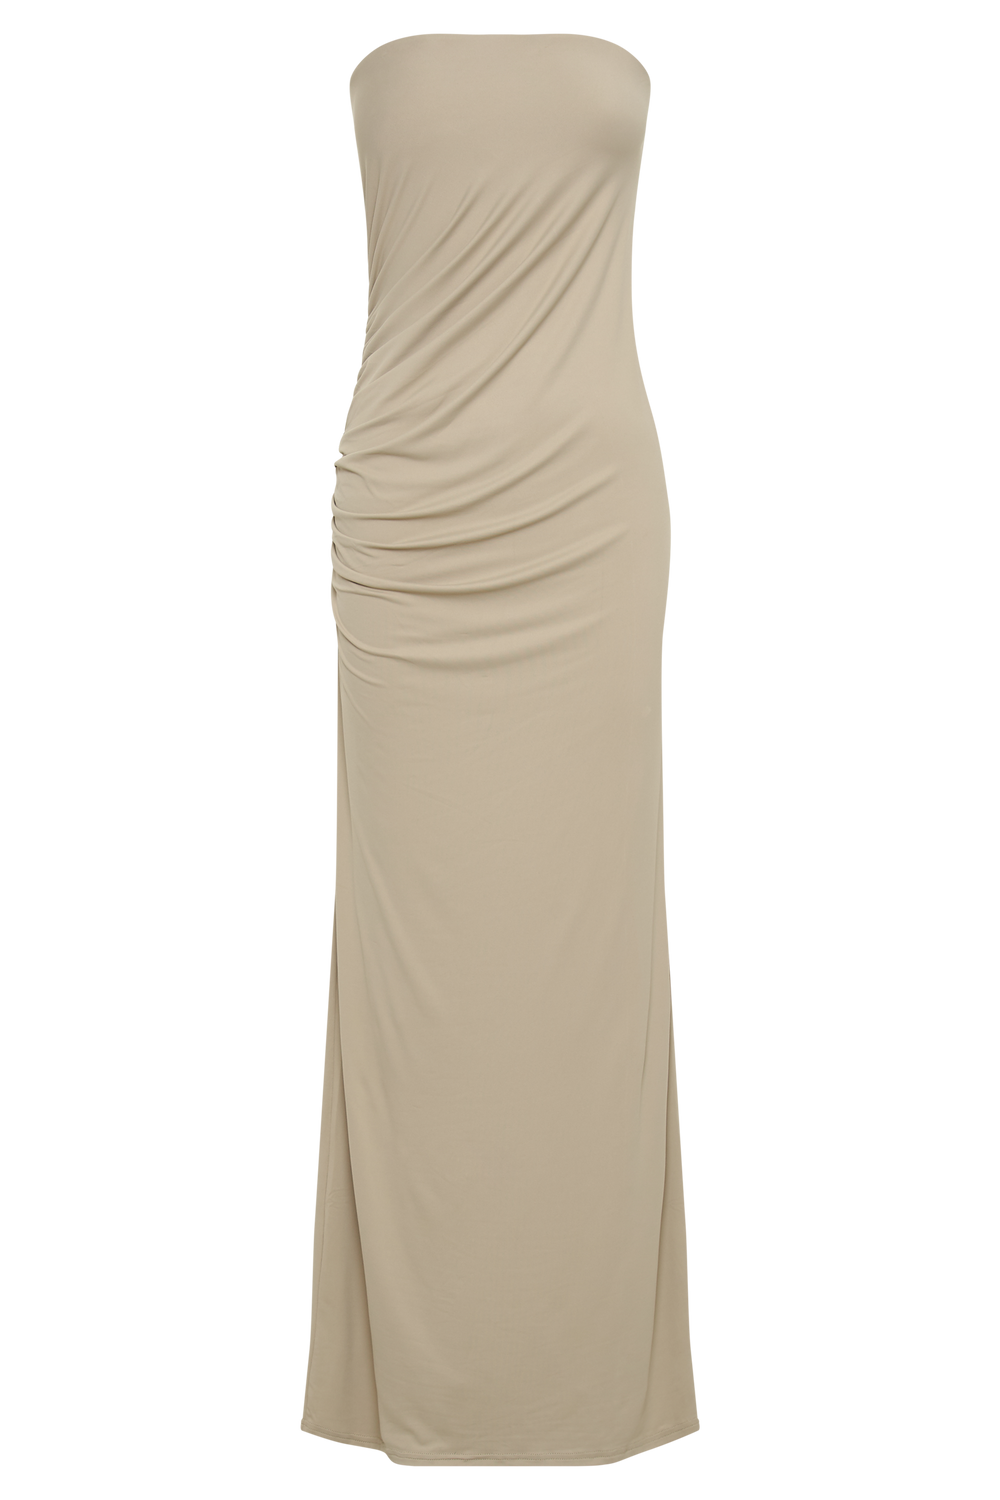 Astraea Recycled Nylon Drape Maxi Dress - Taupe